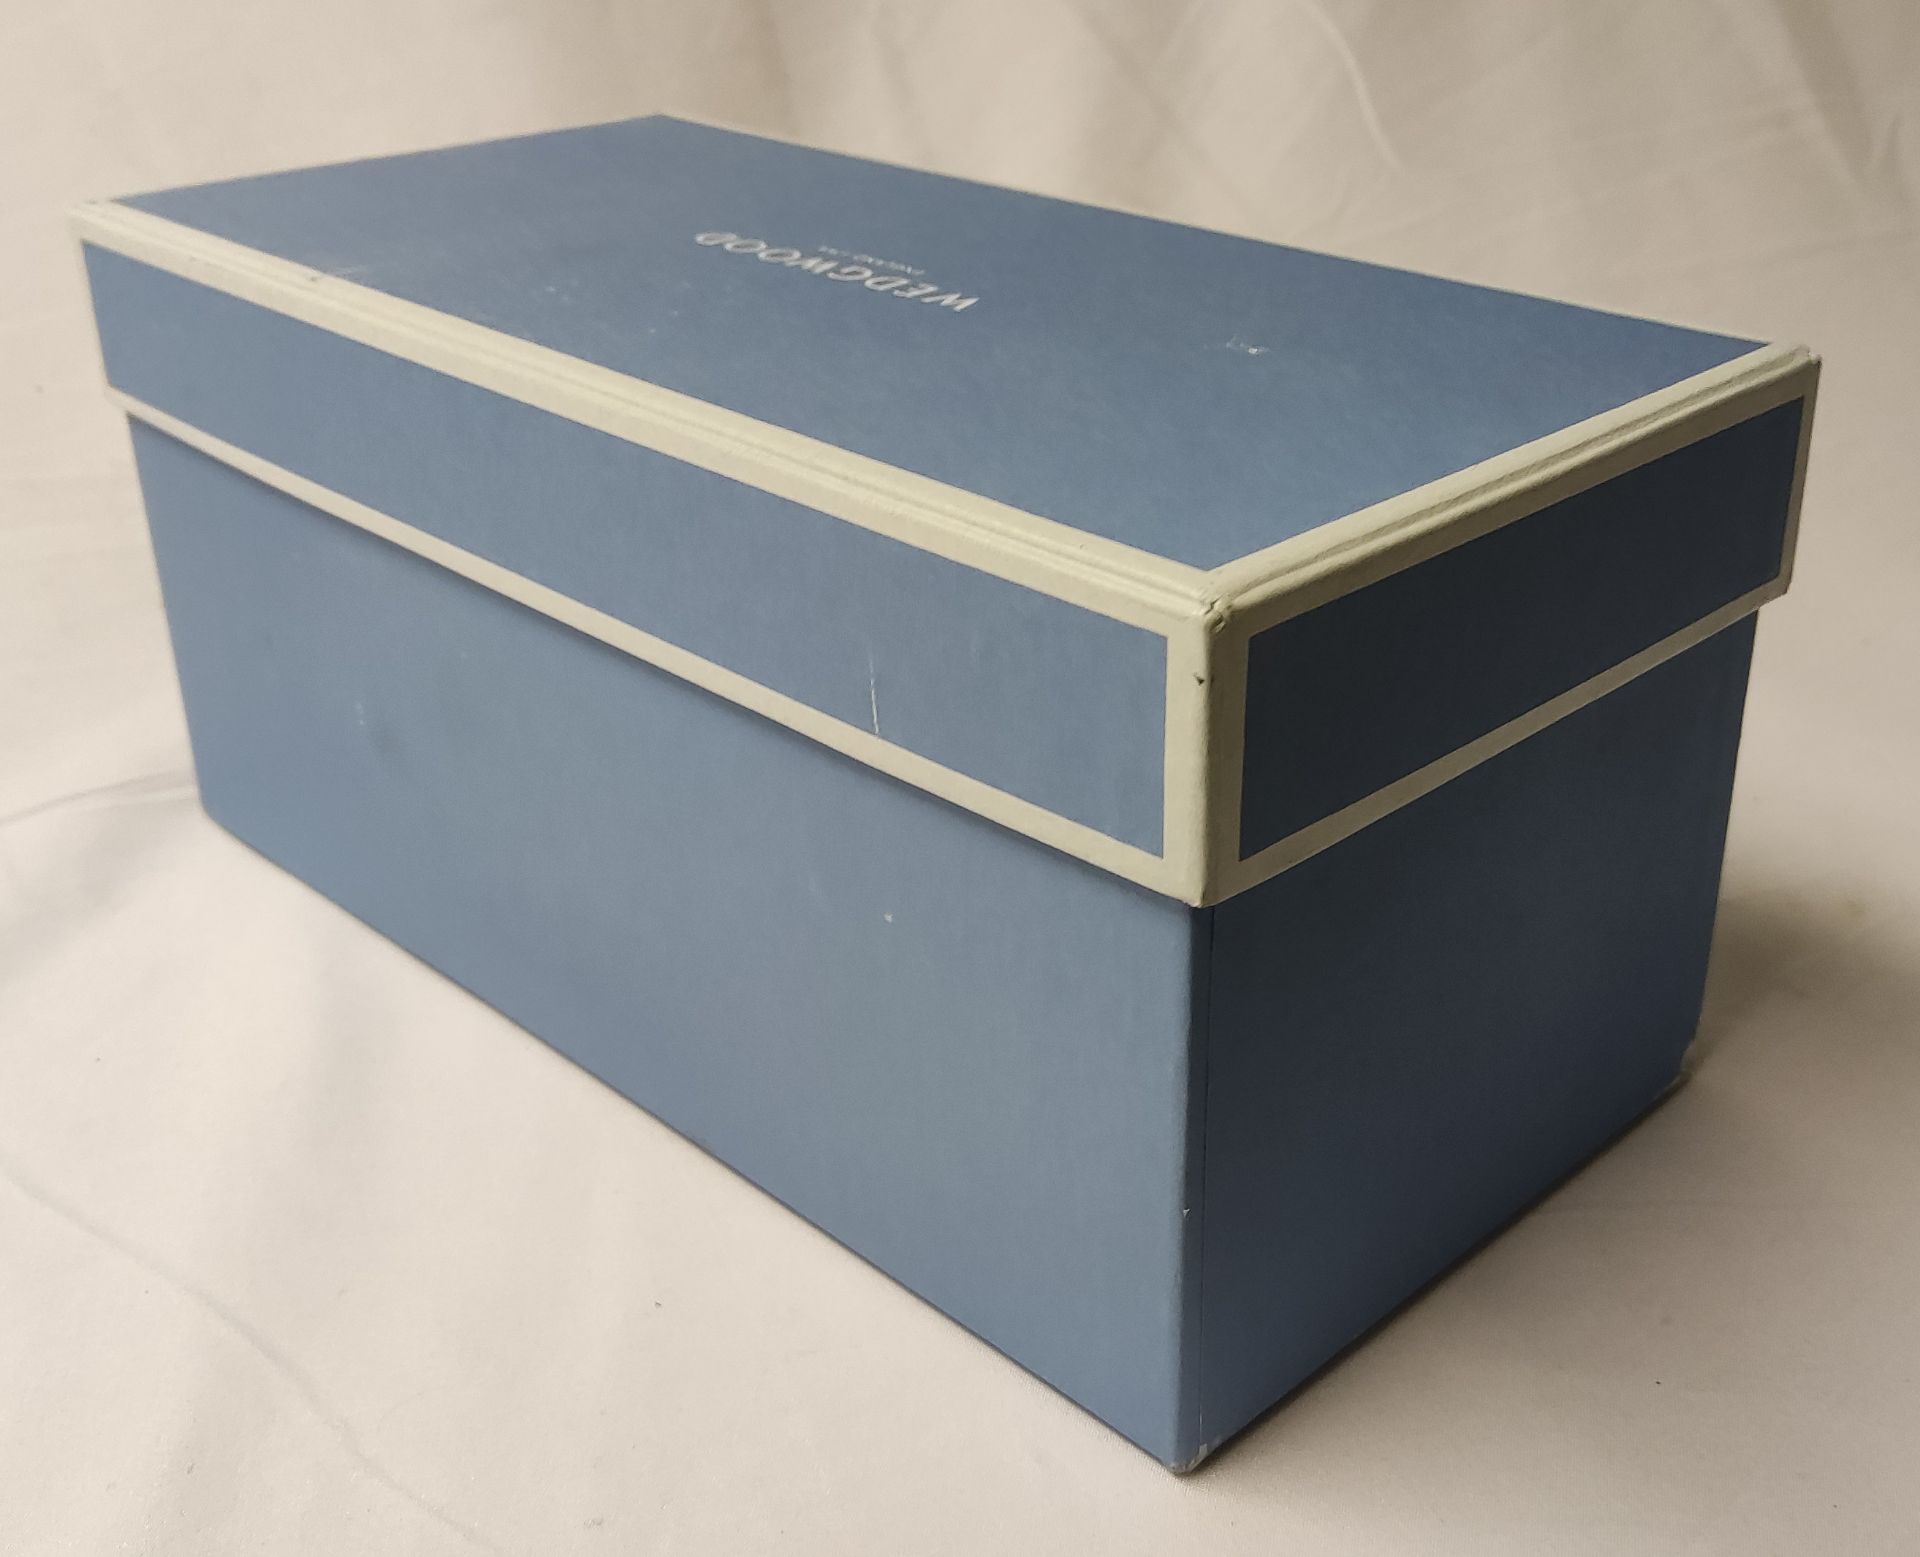 1 x WEDGWOOD Wonderlust Waterlily Fine Bone China Sugar & Creamer Set - New/Boxed - RRP £80 - - Image 12 of 22